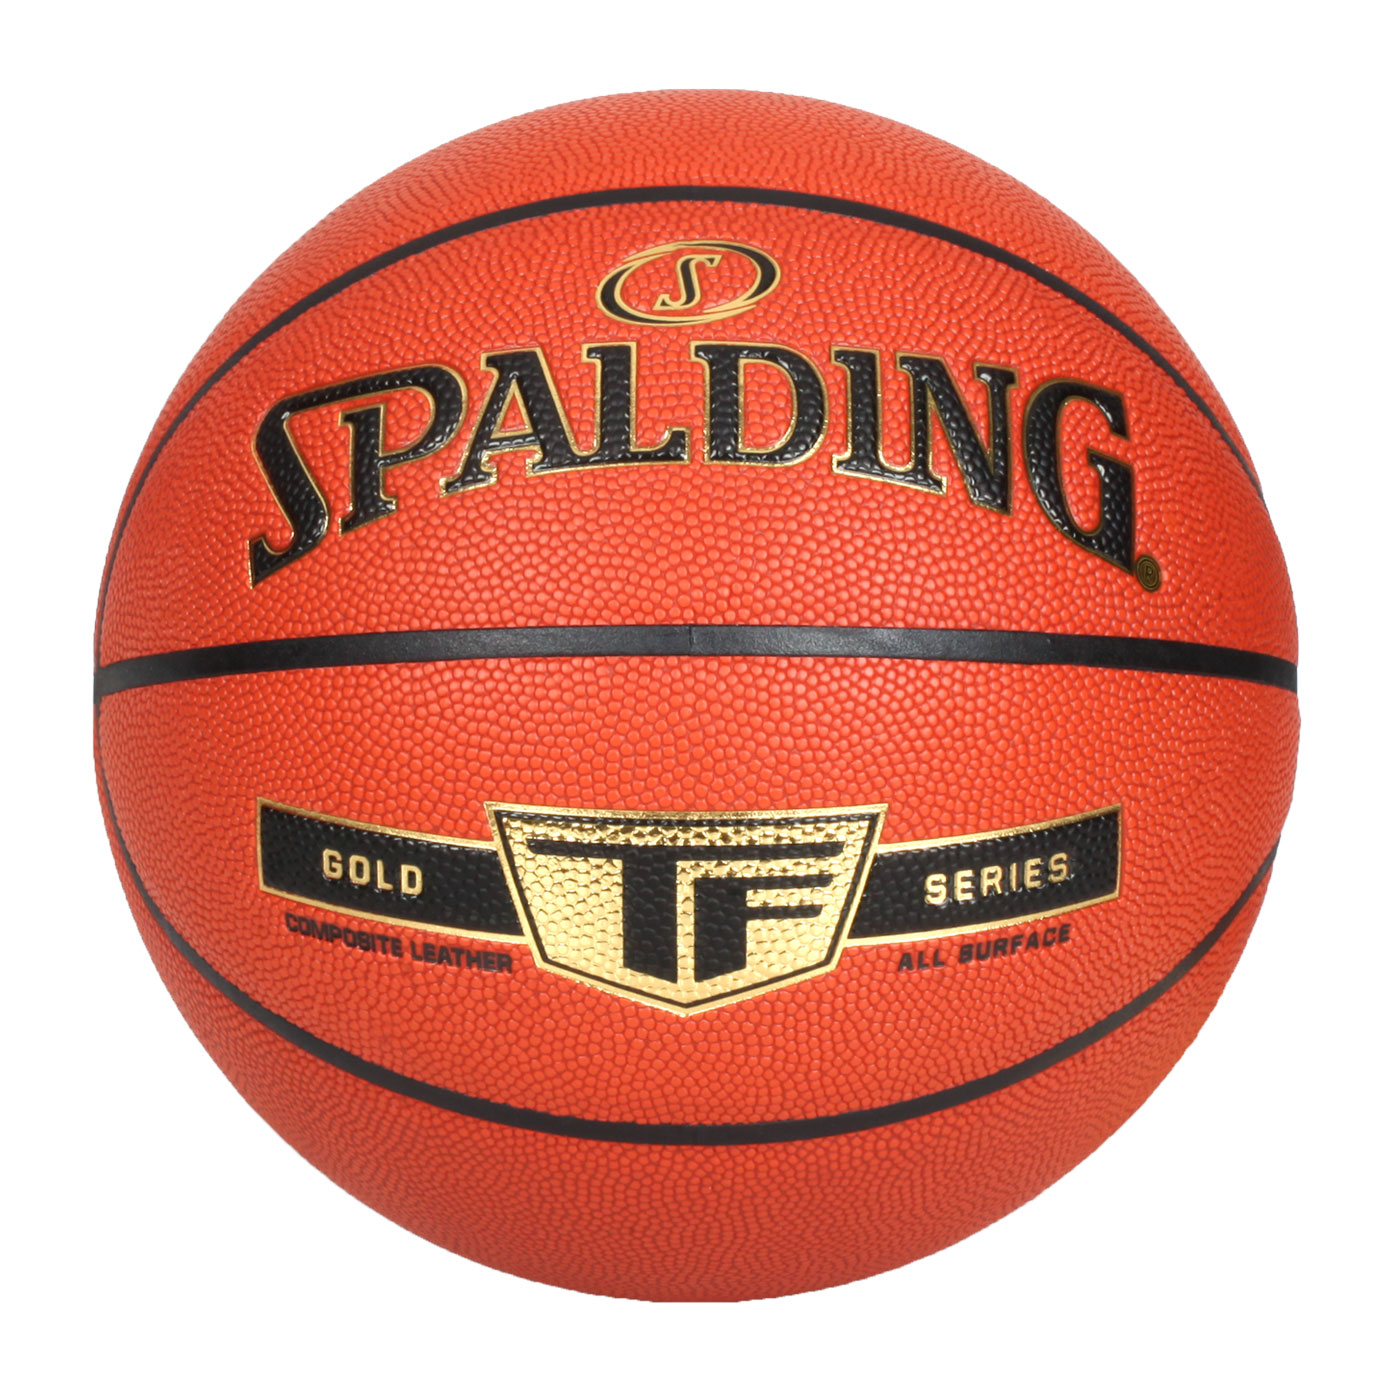 SPALDING TF #7合成皮籃球#40517 SPA76857 - 橘黑金